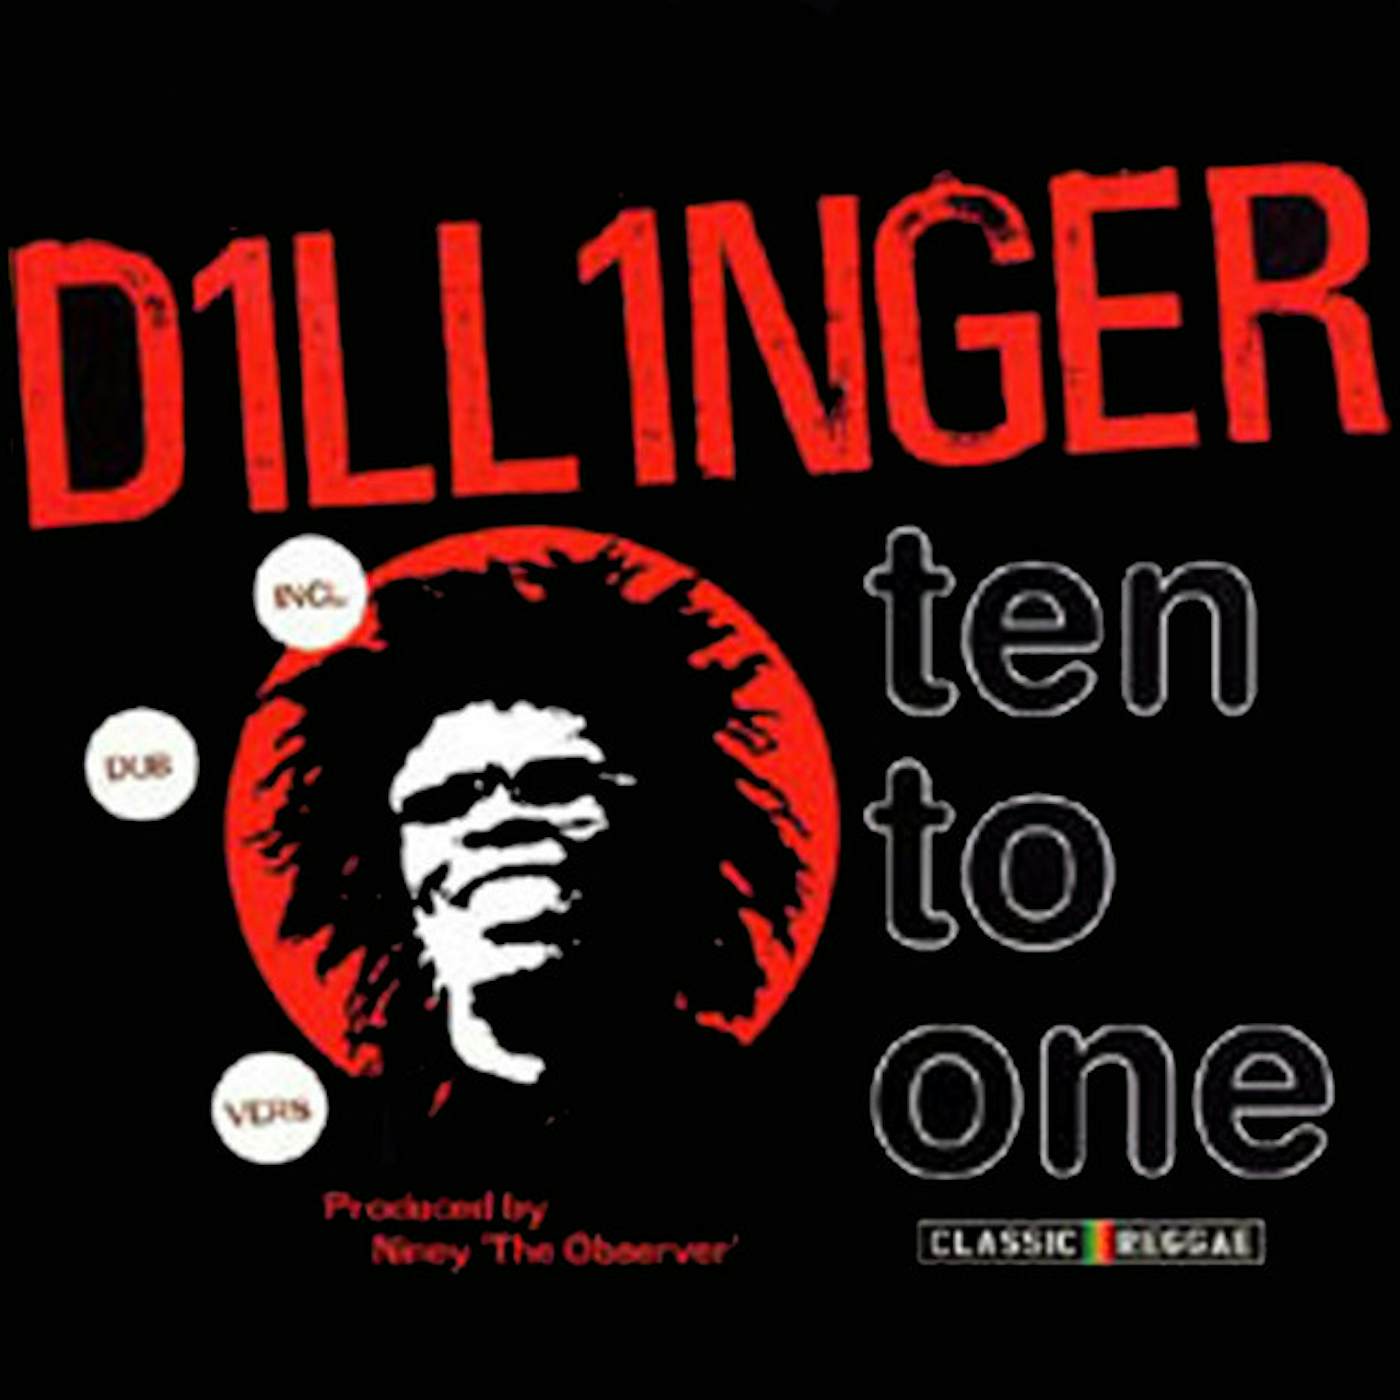 Dillinger TEN TO ONE CD